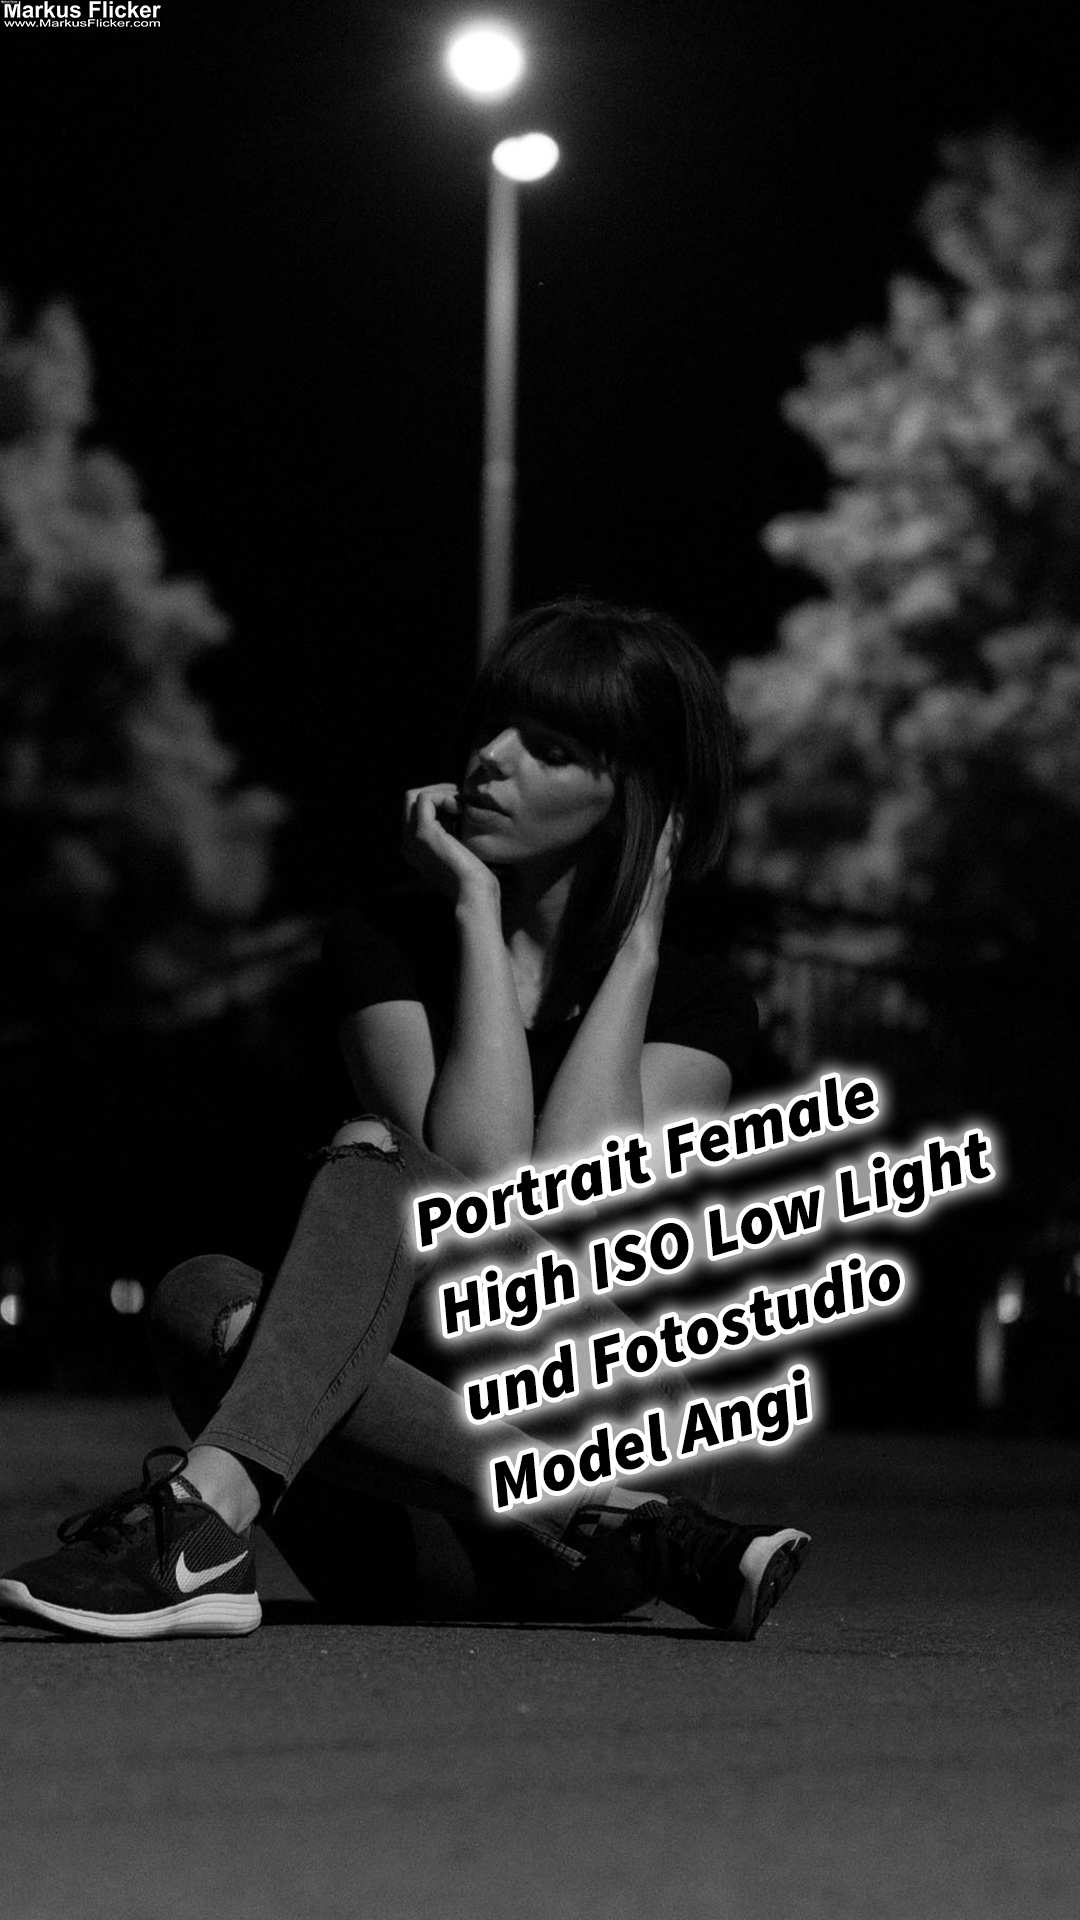 Portrait Female High ISO Low Light und Fotostudio Model Angi